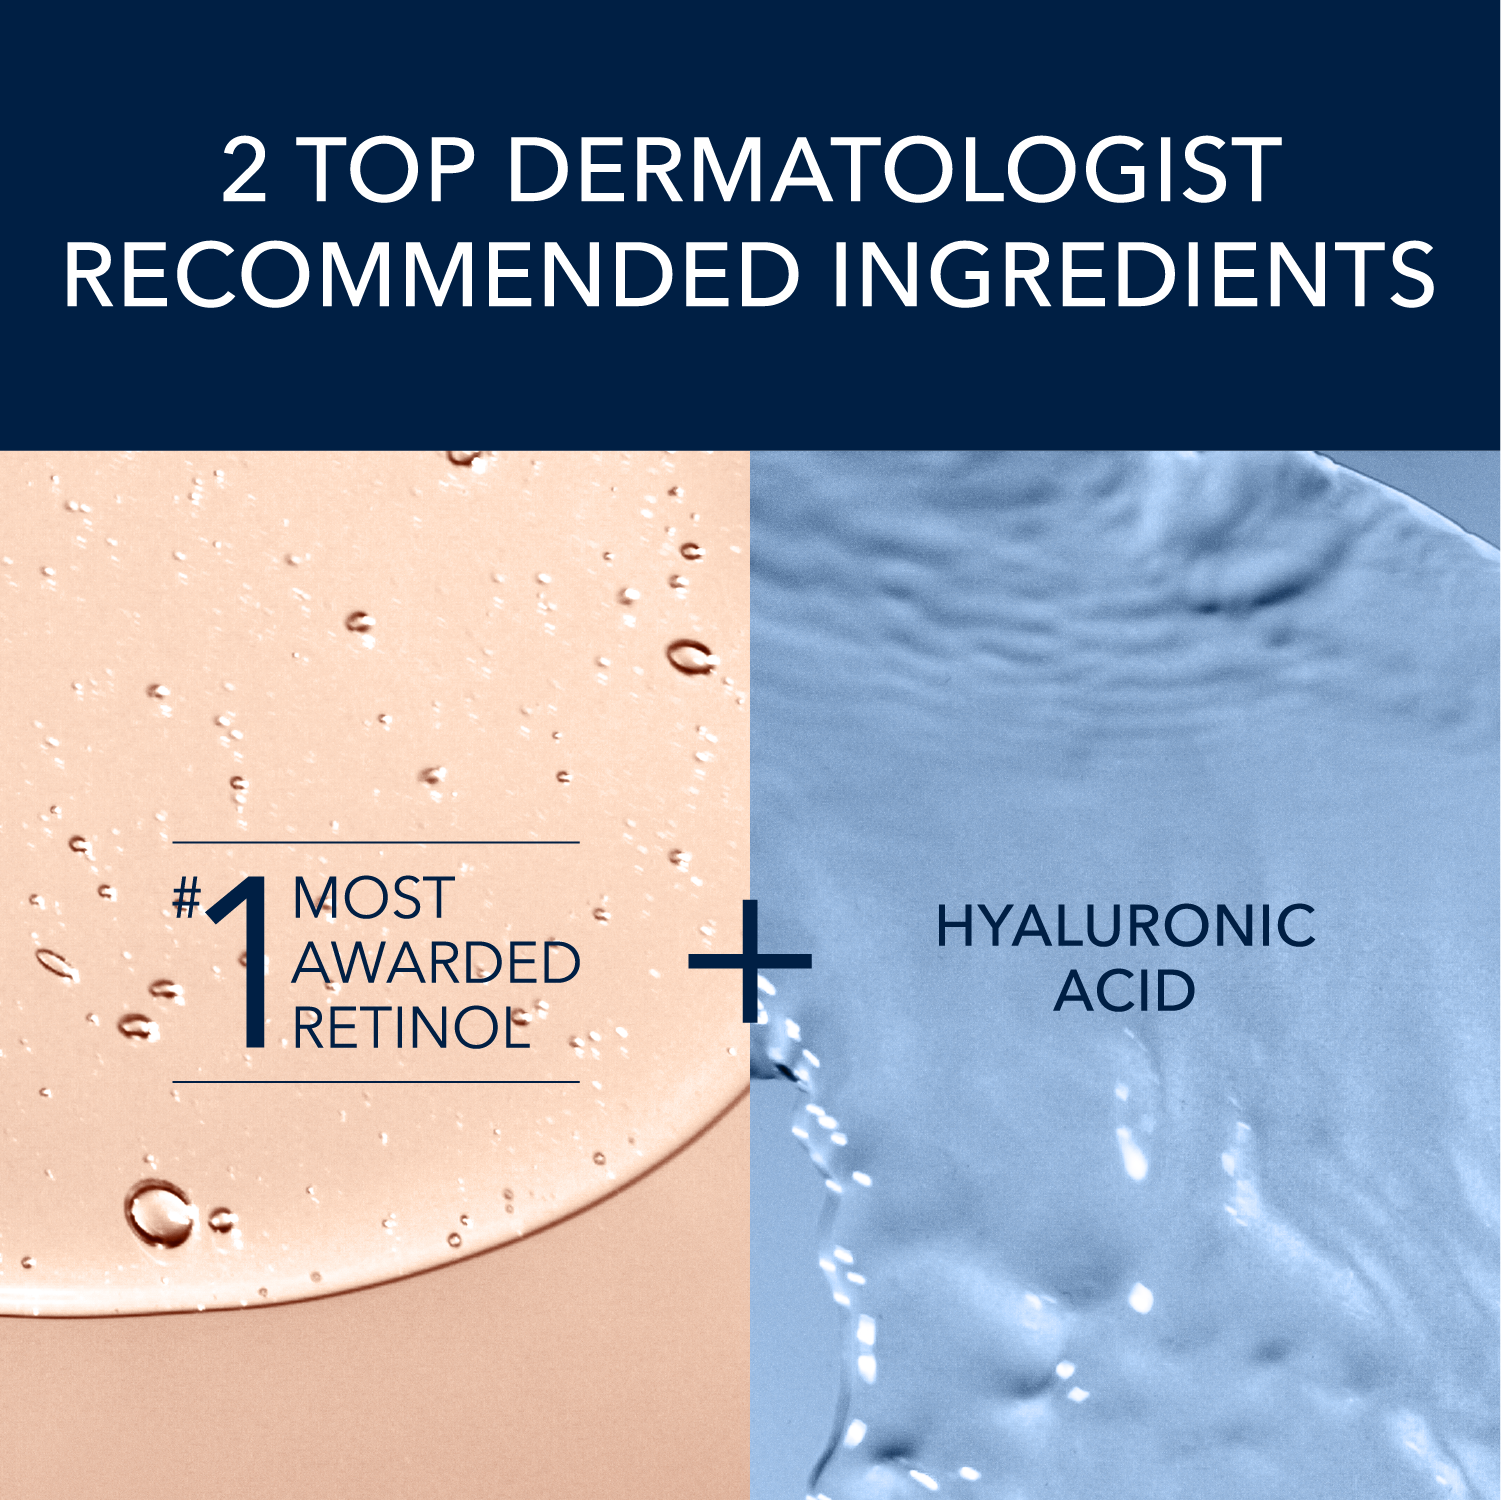 RoC Retinol Correxion Anti-Aging Daily Hydration Moisturizer Cream with Hydrating Hyaluronic Acid, Fragrance-Free, 1.7 oz - image 5 of 8